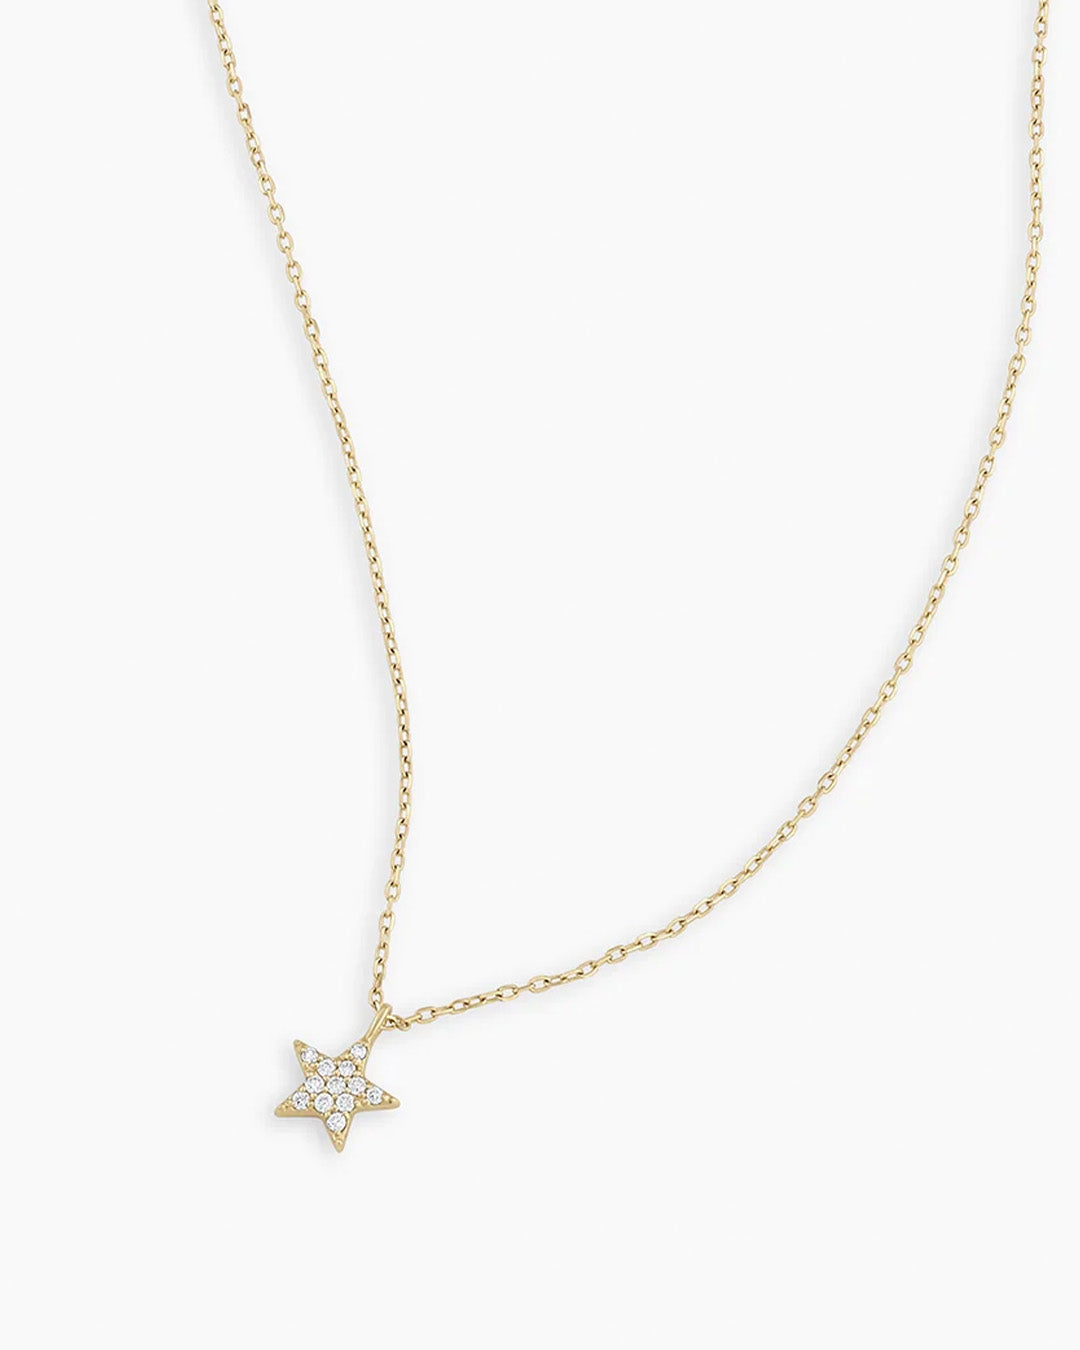 White gold Diamond Baby Star pendant | Argenton Design bespoke fine  jewellery